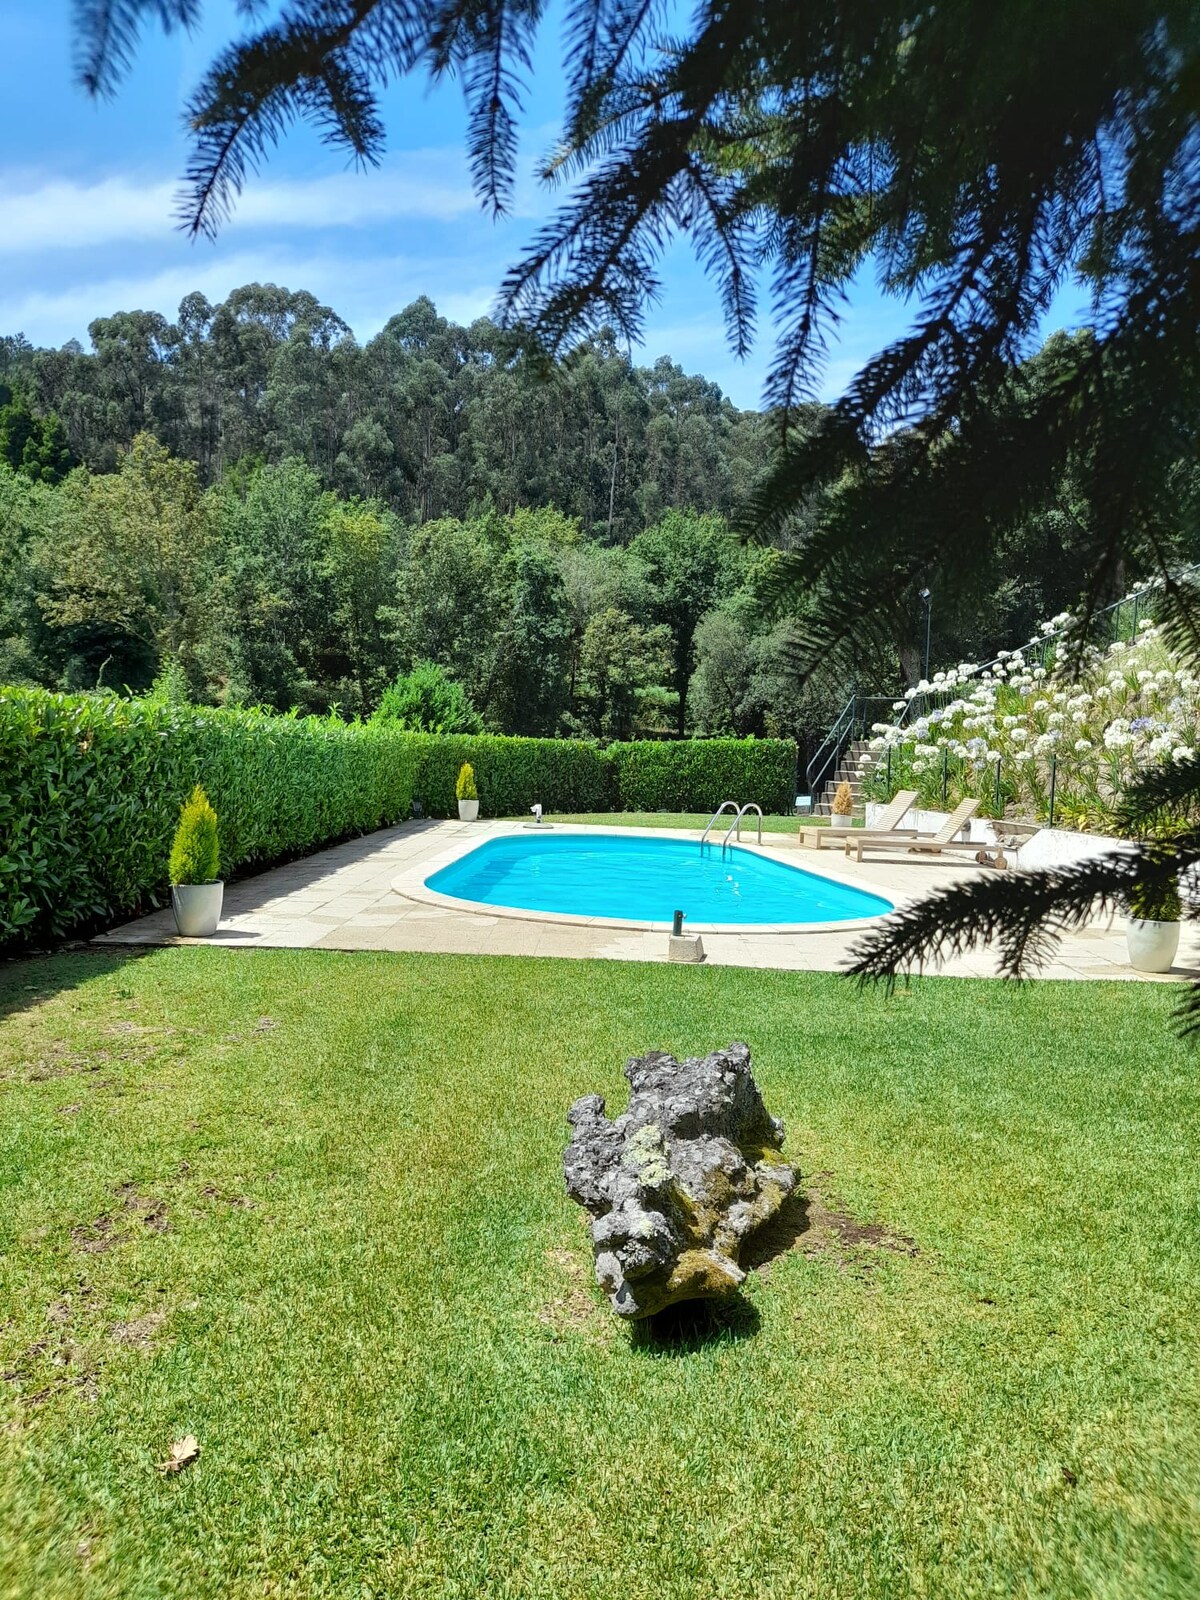 Casa do Ribeiro - Piscina & jardim exclusivos!